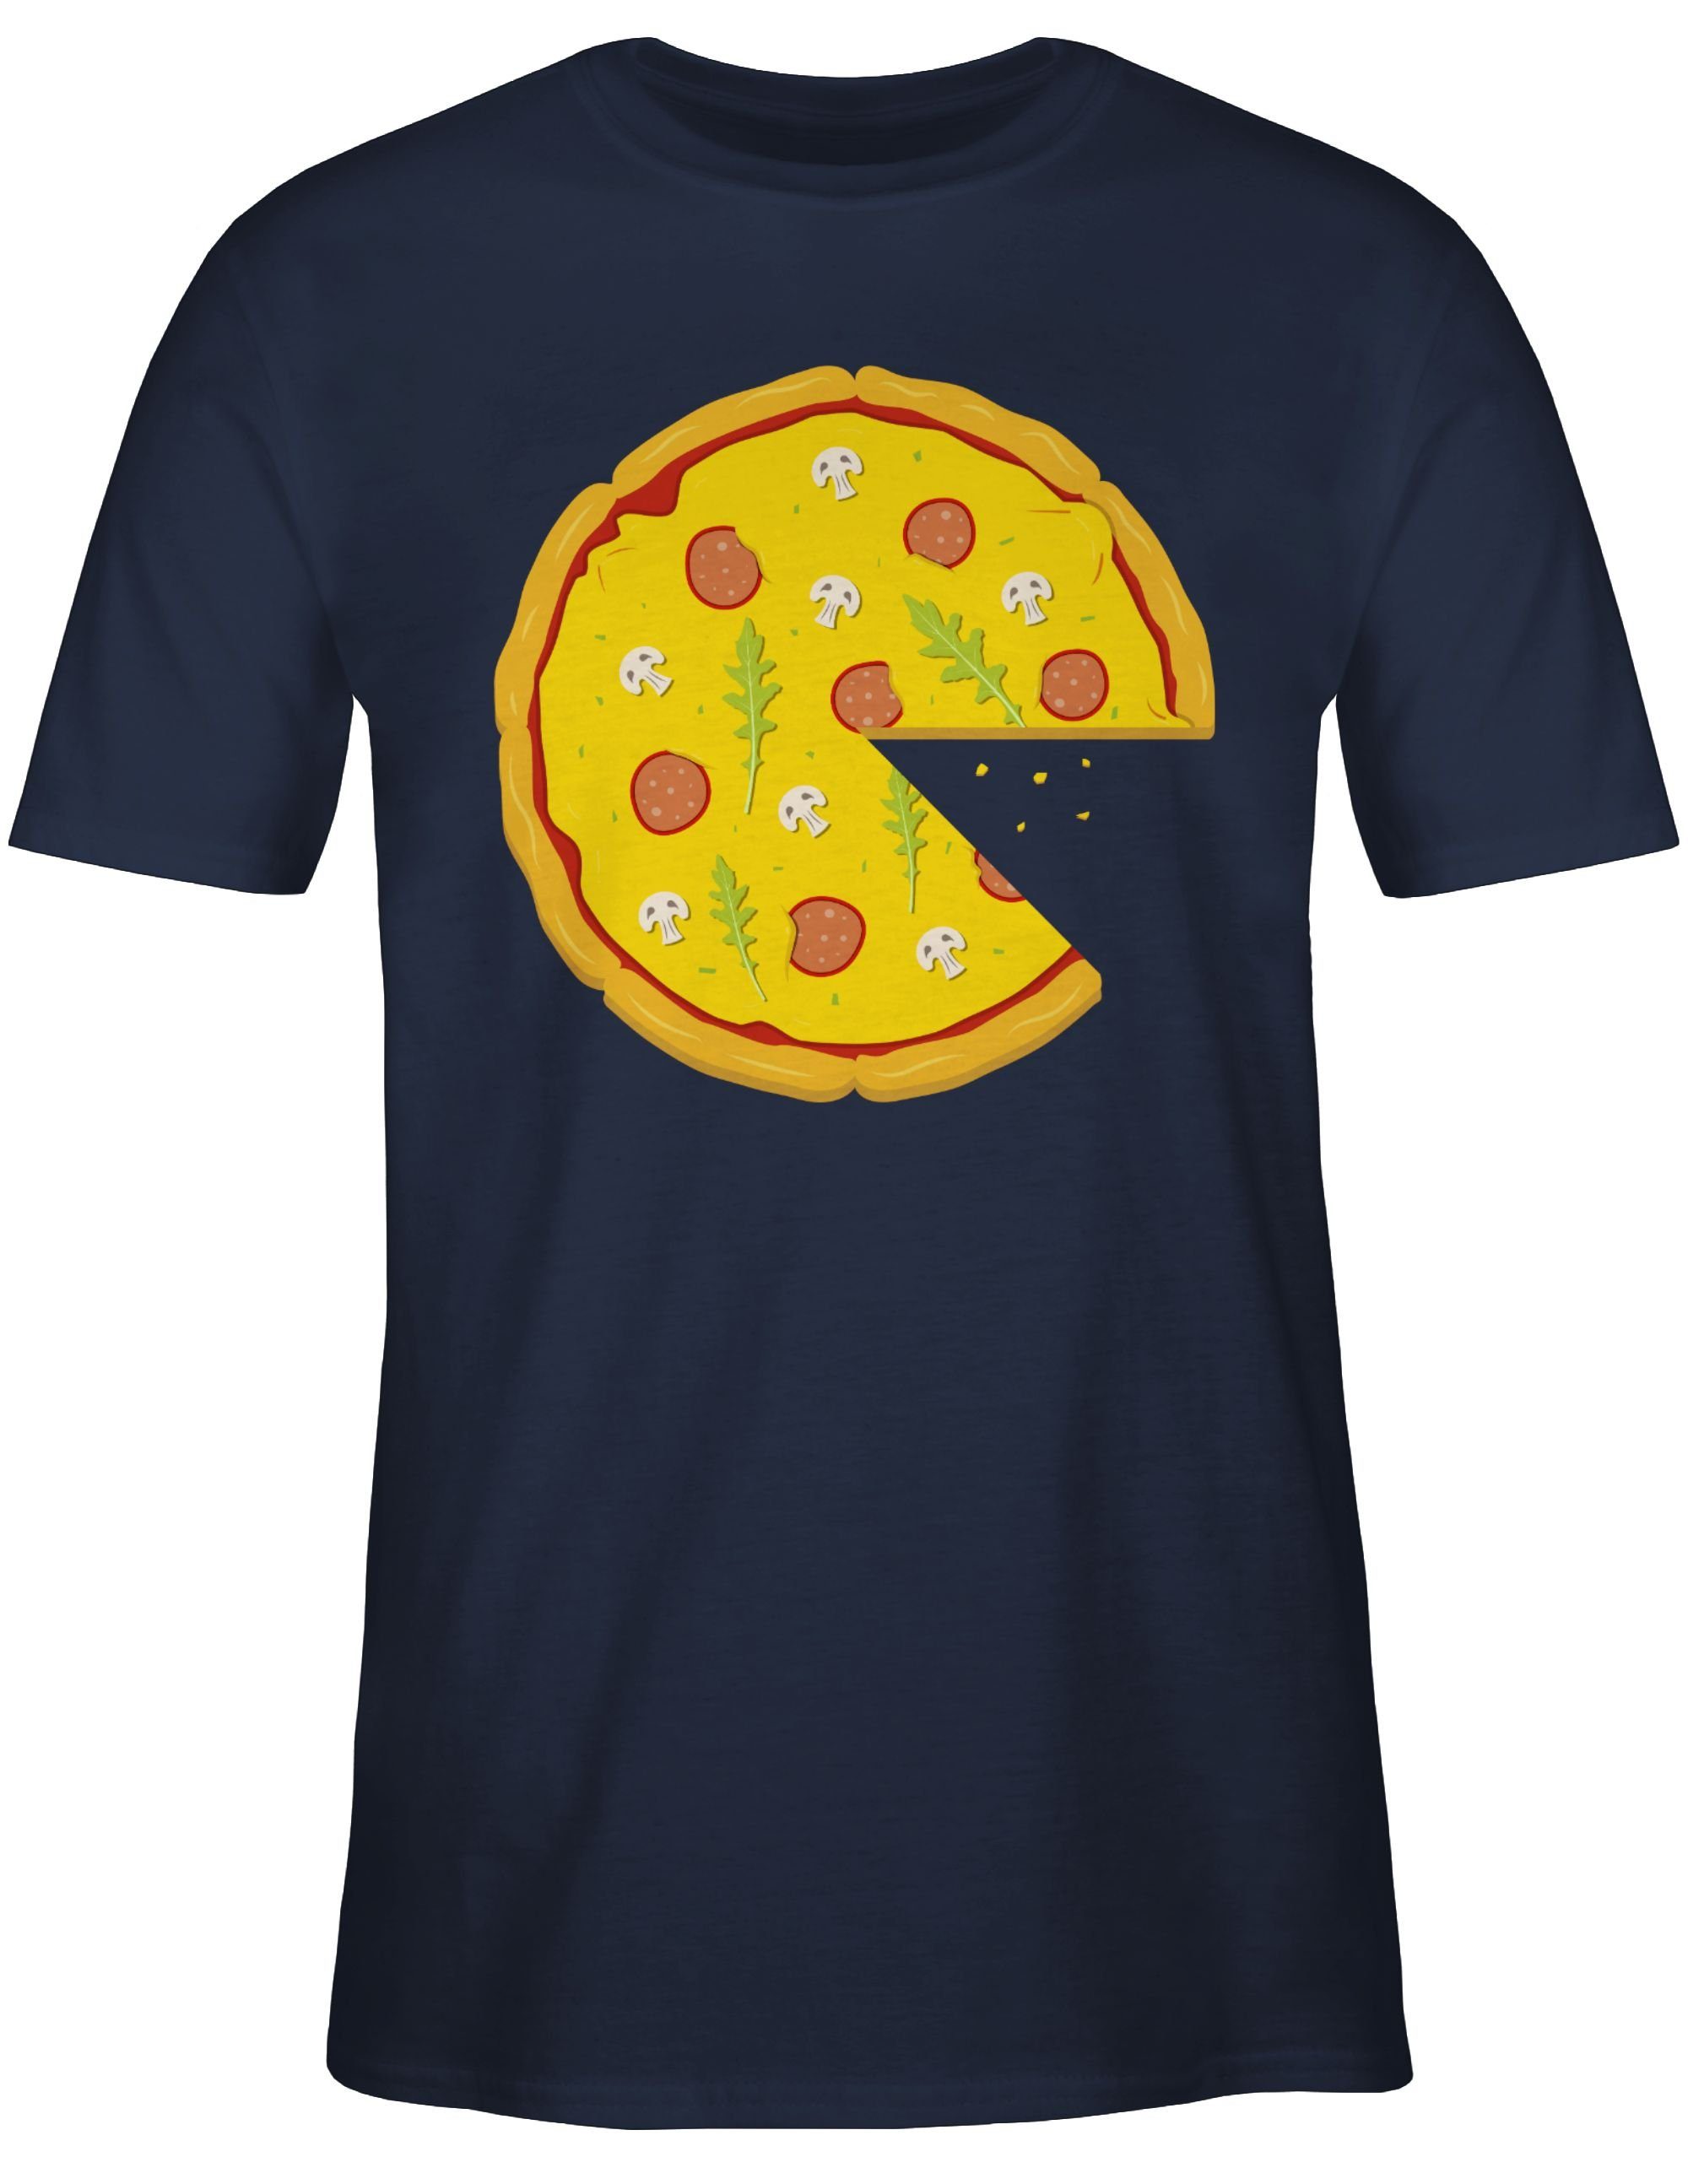 Pärchen 3 Shirtracer Partner-Look Blau T-Shirt Pizza Partner Navy Herren 1 Teil